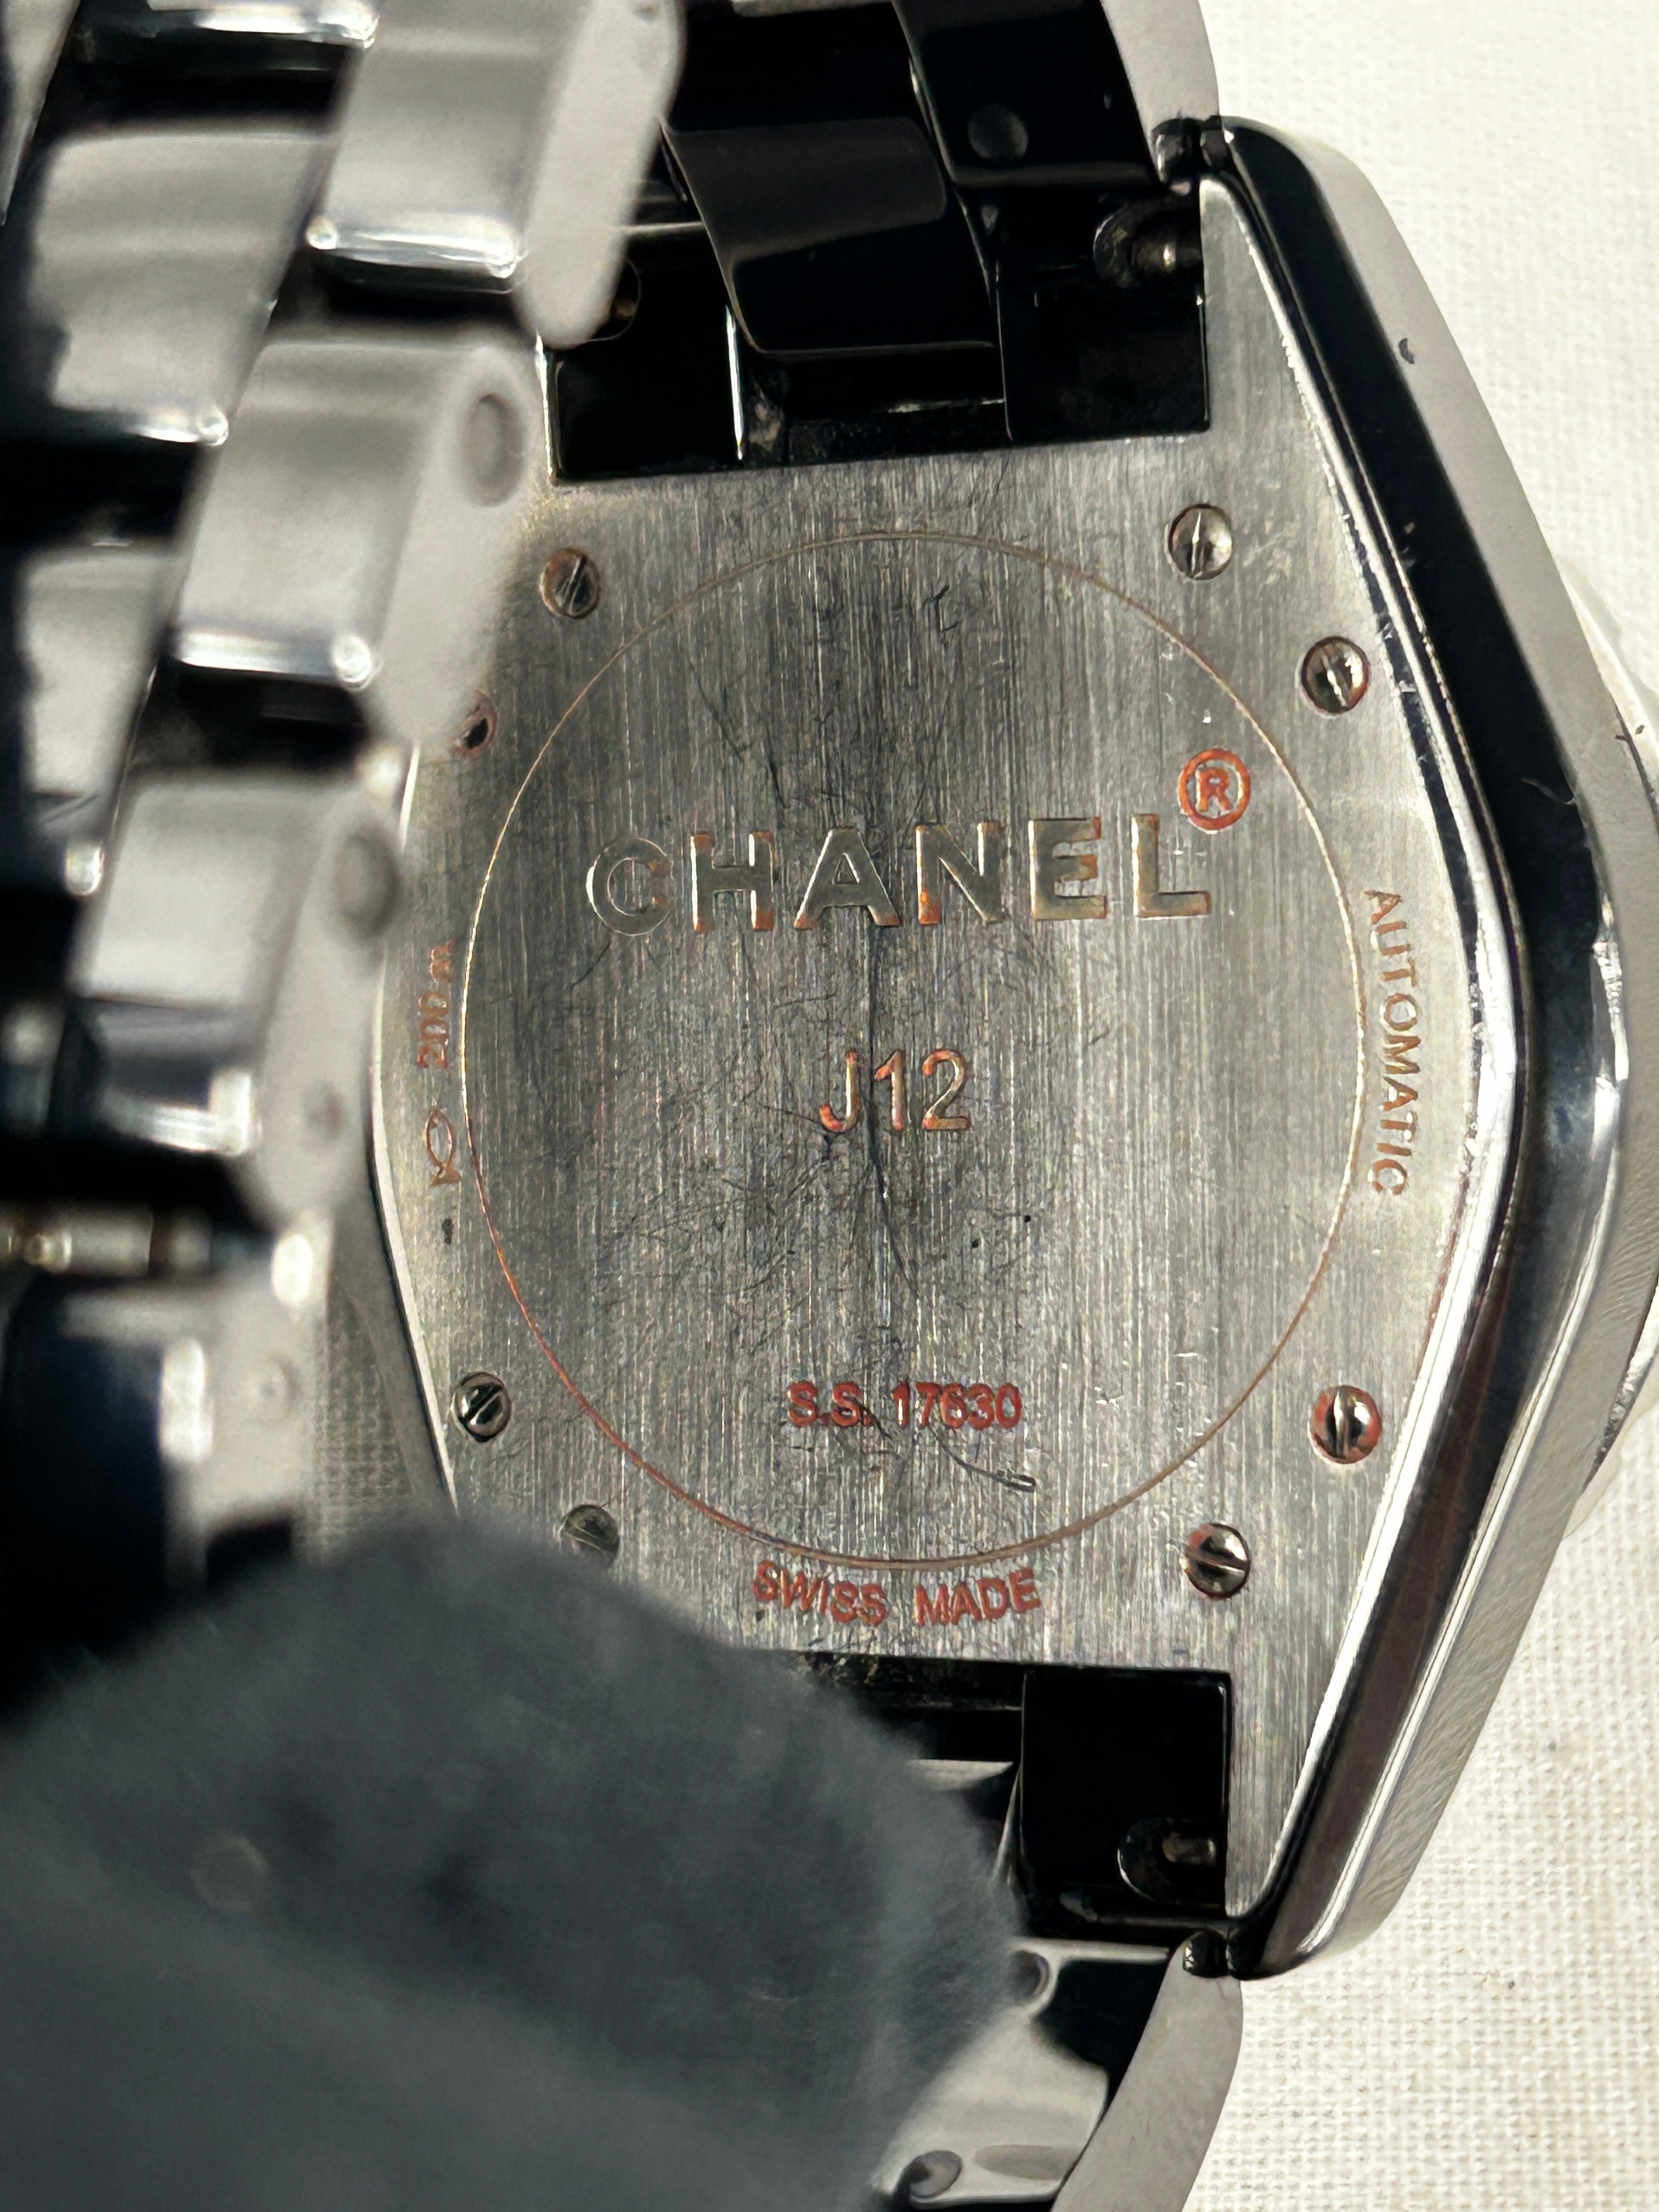 J12 Black Ceramic 38mm w/Accent Diamond Watch